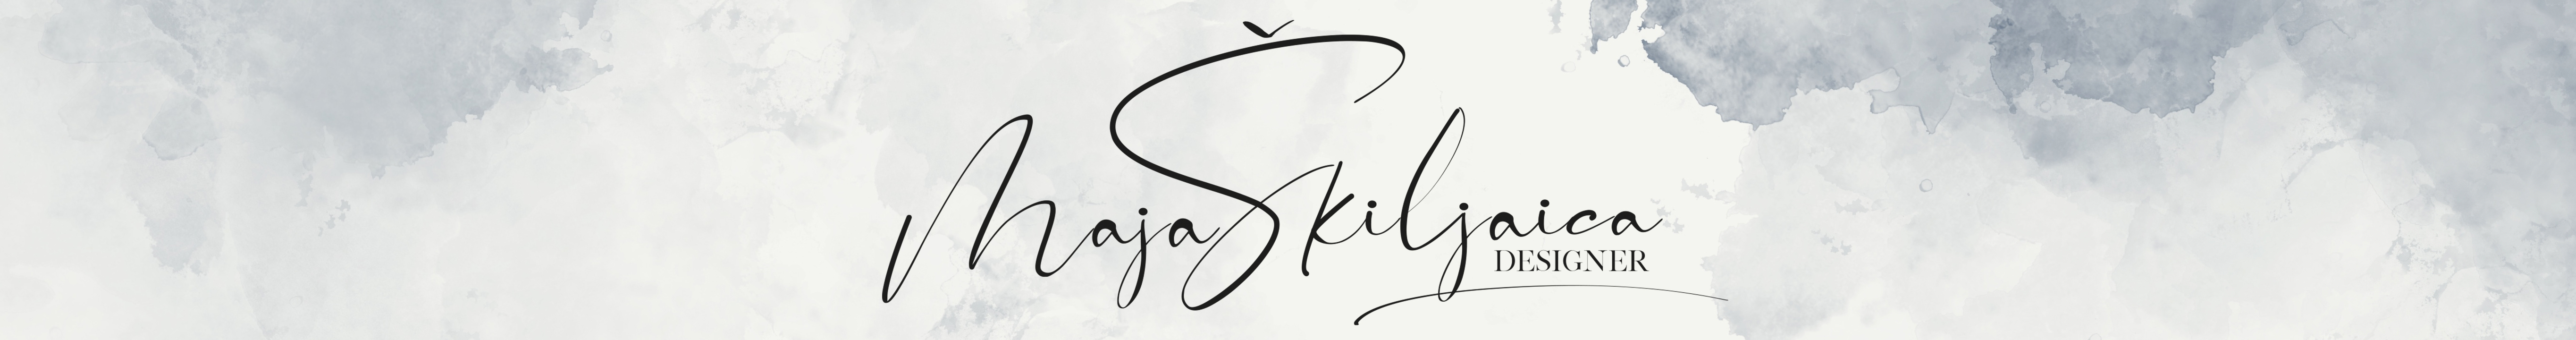 Profil-Banner von Maja Skiljaica